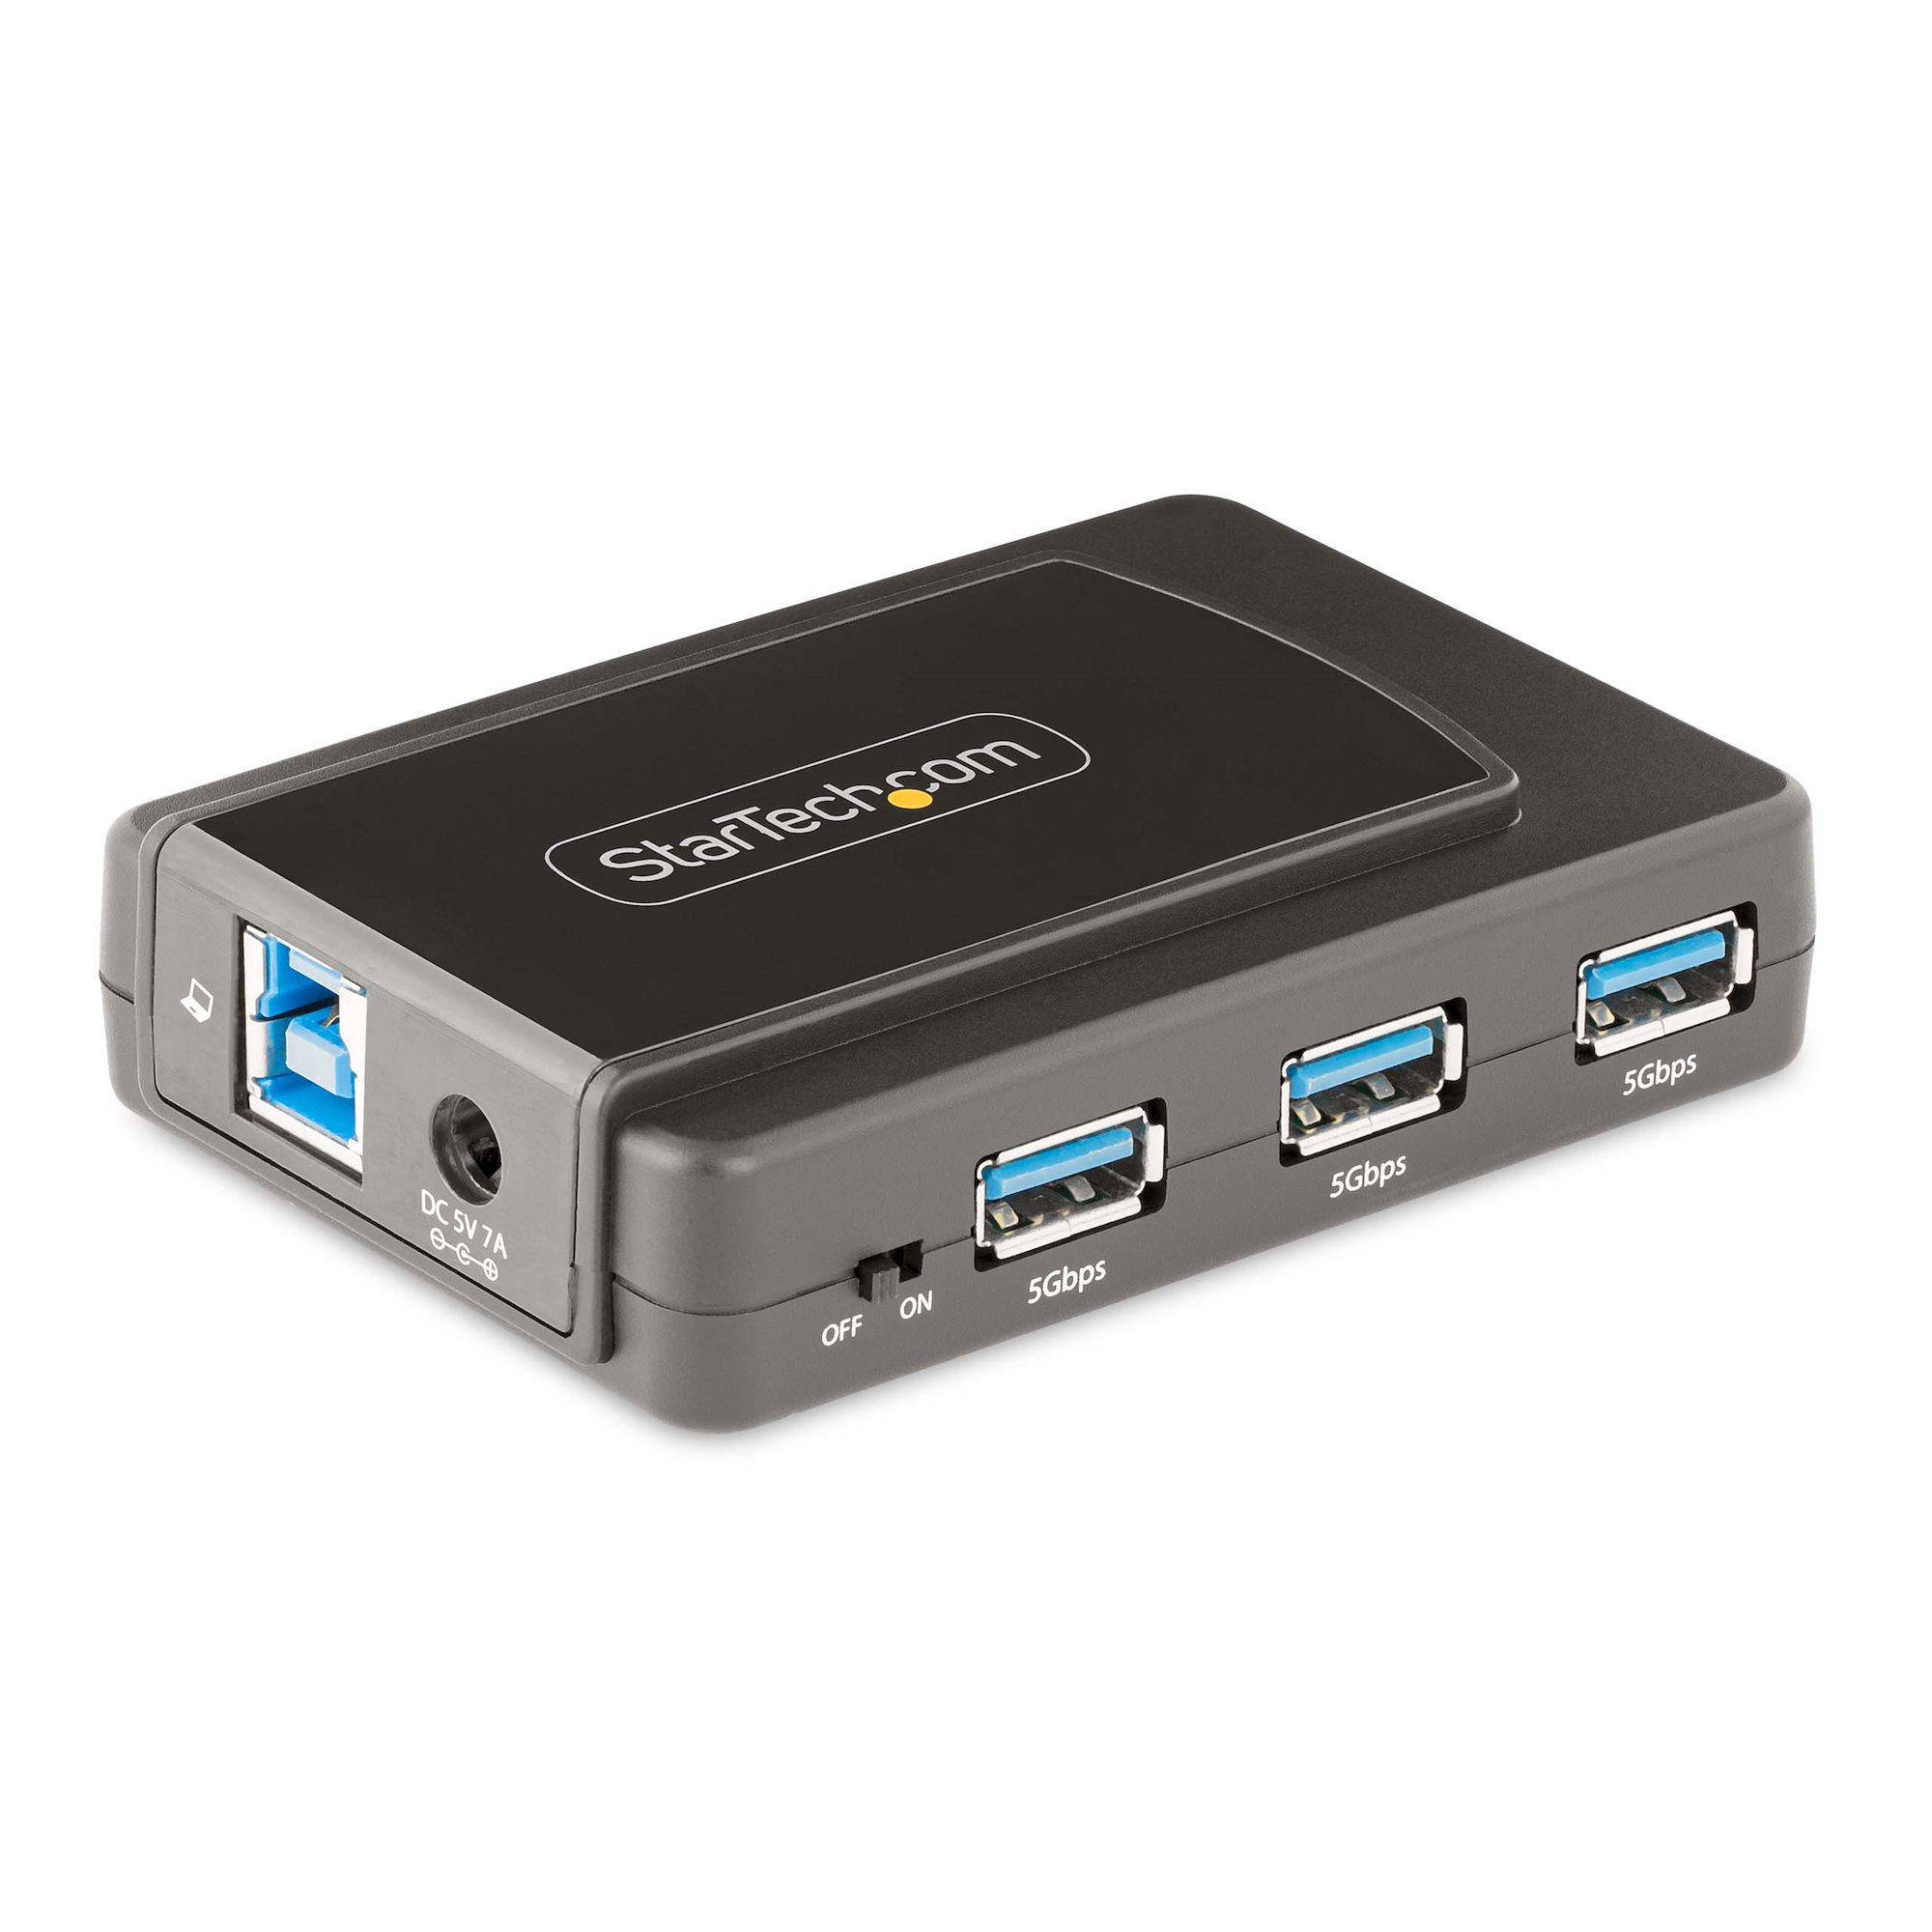 5G7AS-USB-A-HUB STARTECH.COM 7-PORT USB HUB WITH ON/OFF SWITCH - USB 3.0 5GBPS - USB-A TO 7X USB-A - COMPACT